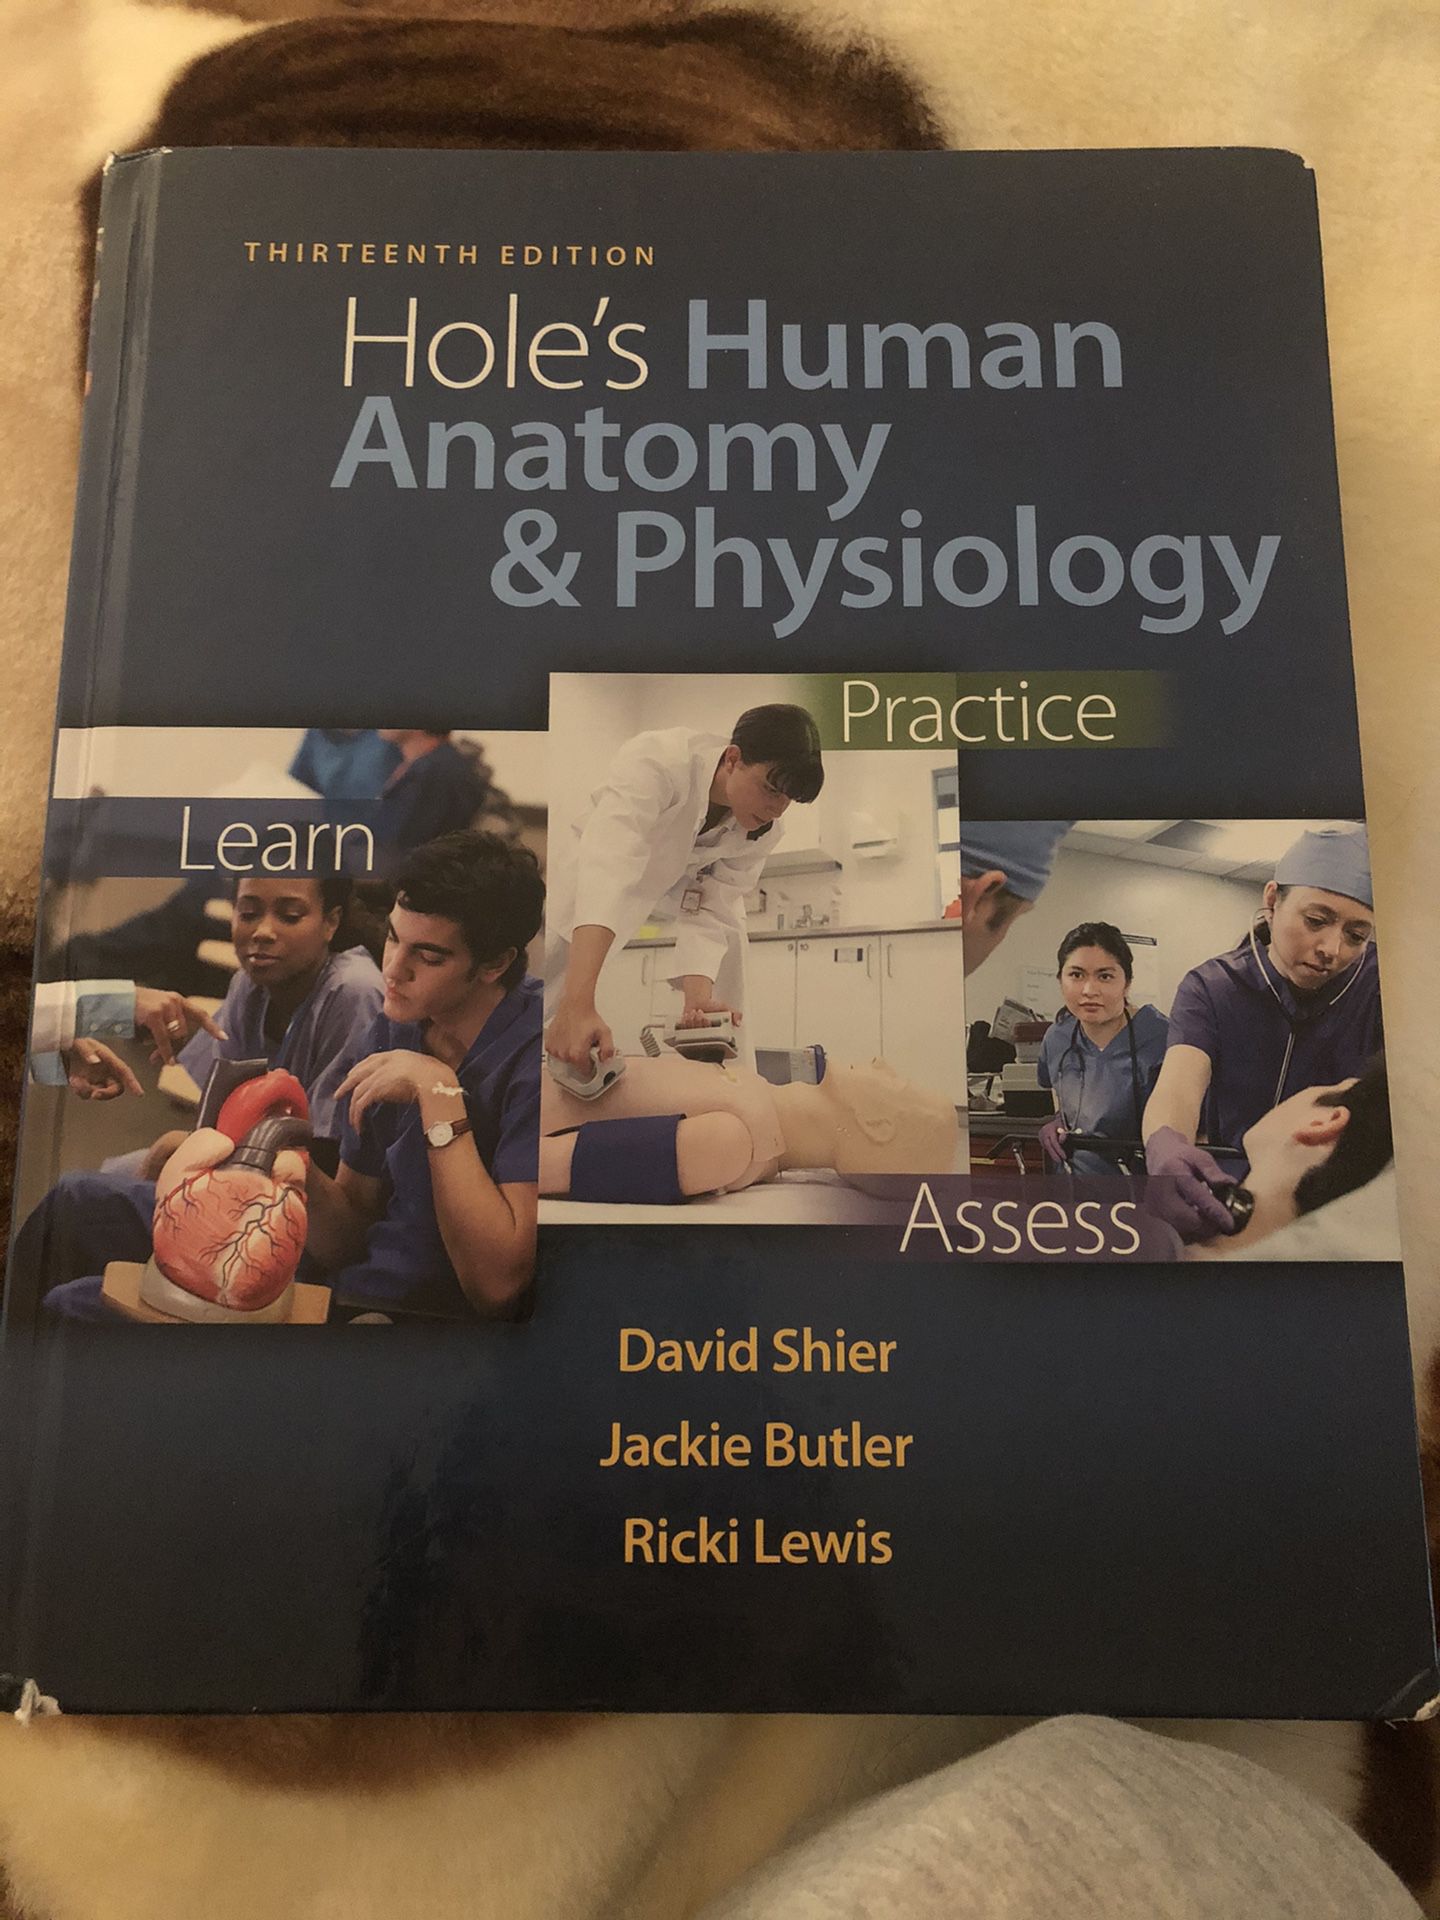 Hole’s Human Anatomy & Physiology (thirteenth edition)